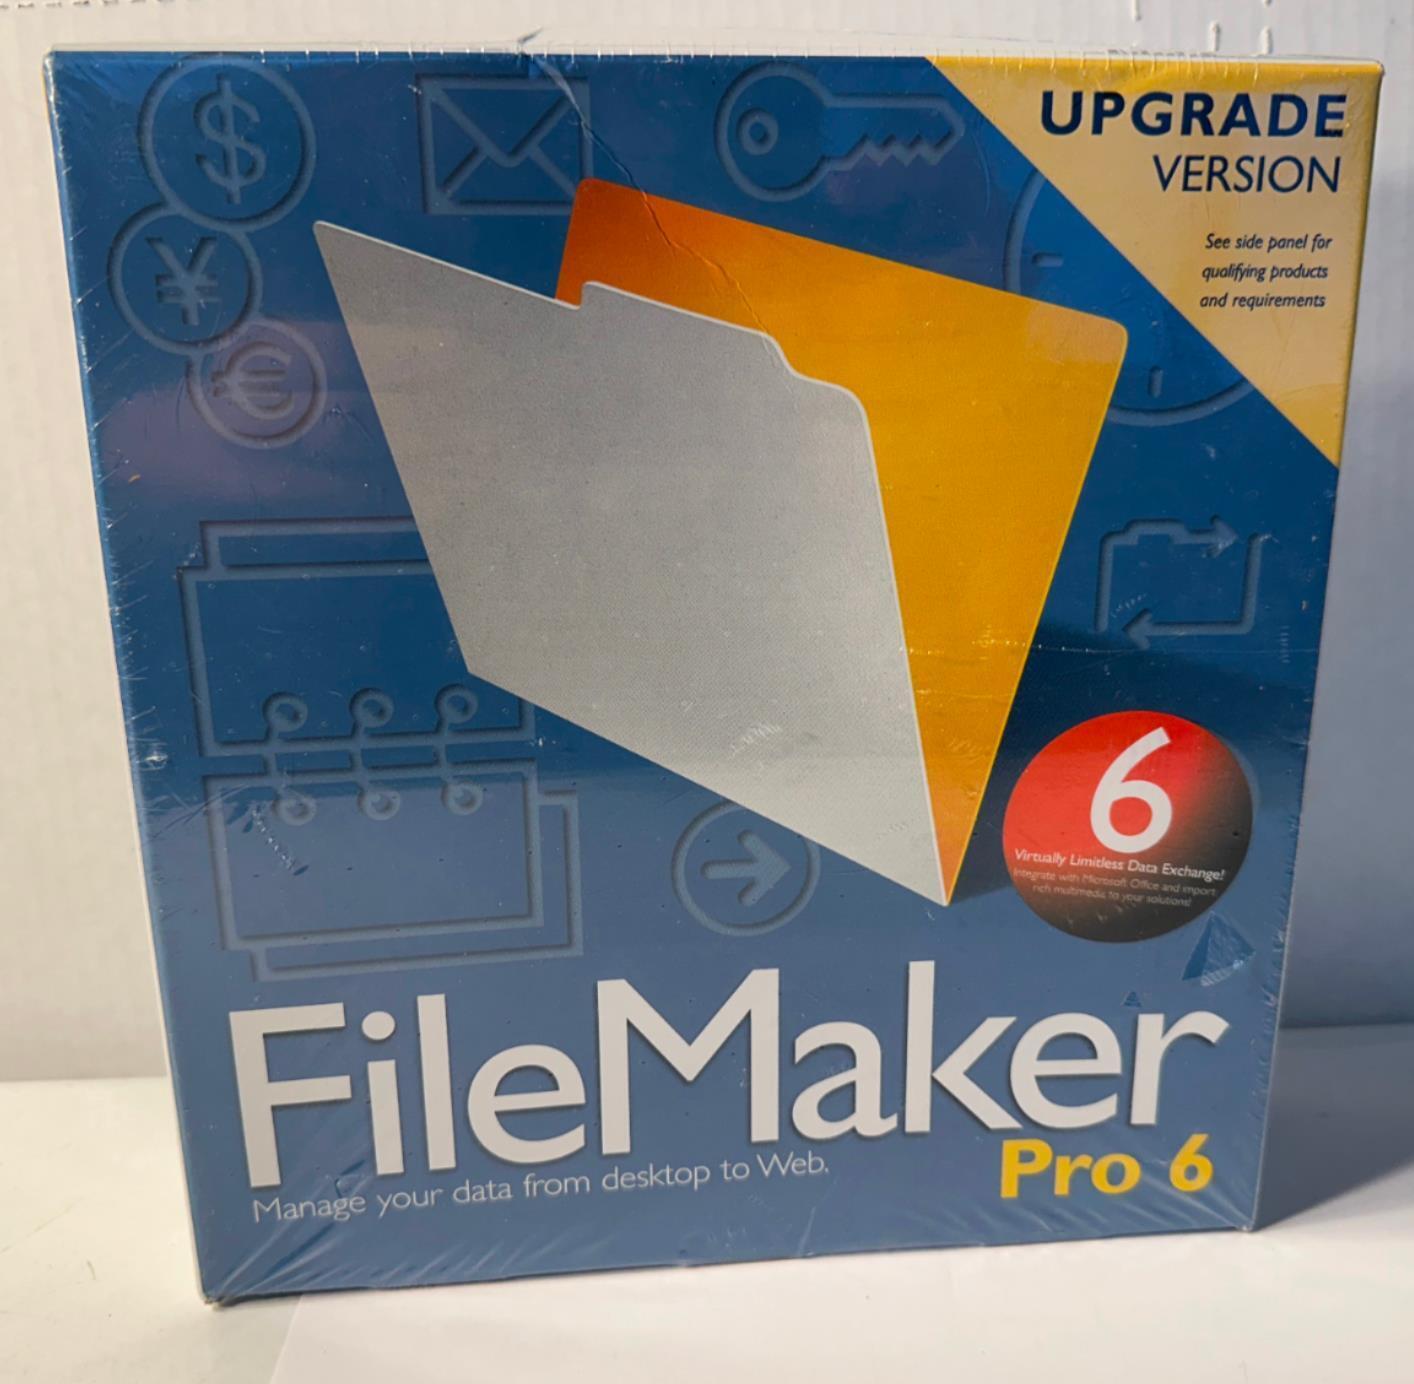 Filemaker Pro 6 Upgrade Version For Windows Brand New Sealed